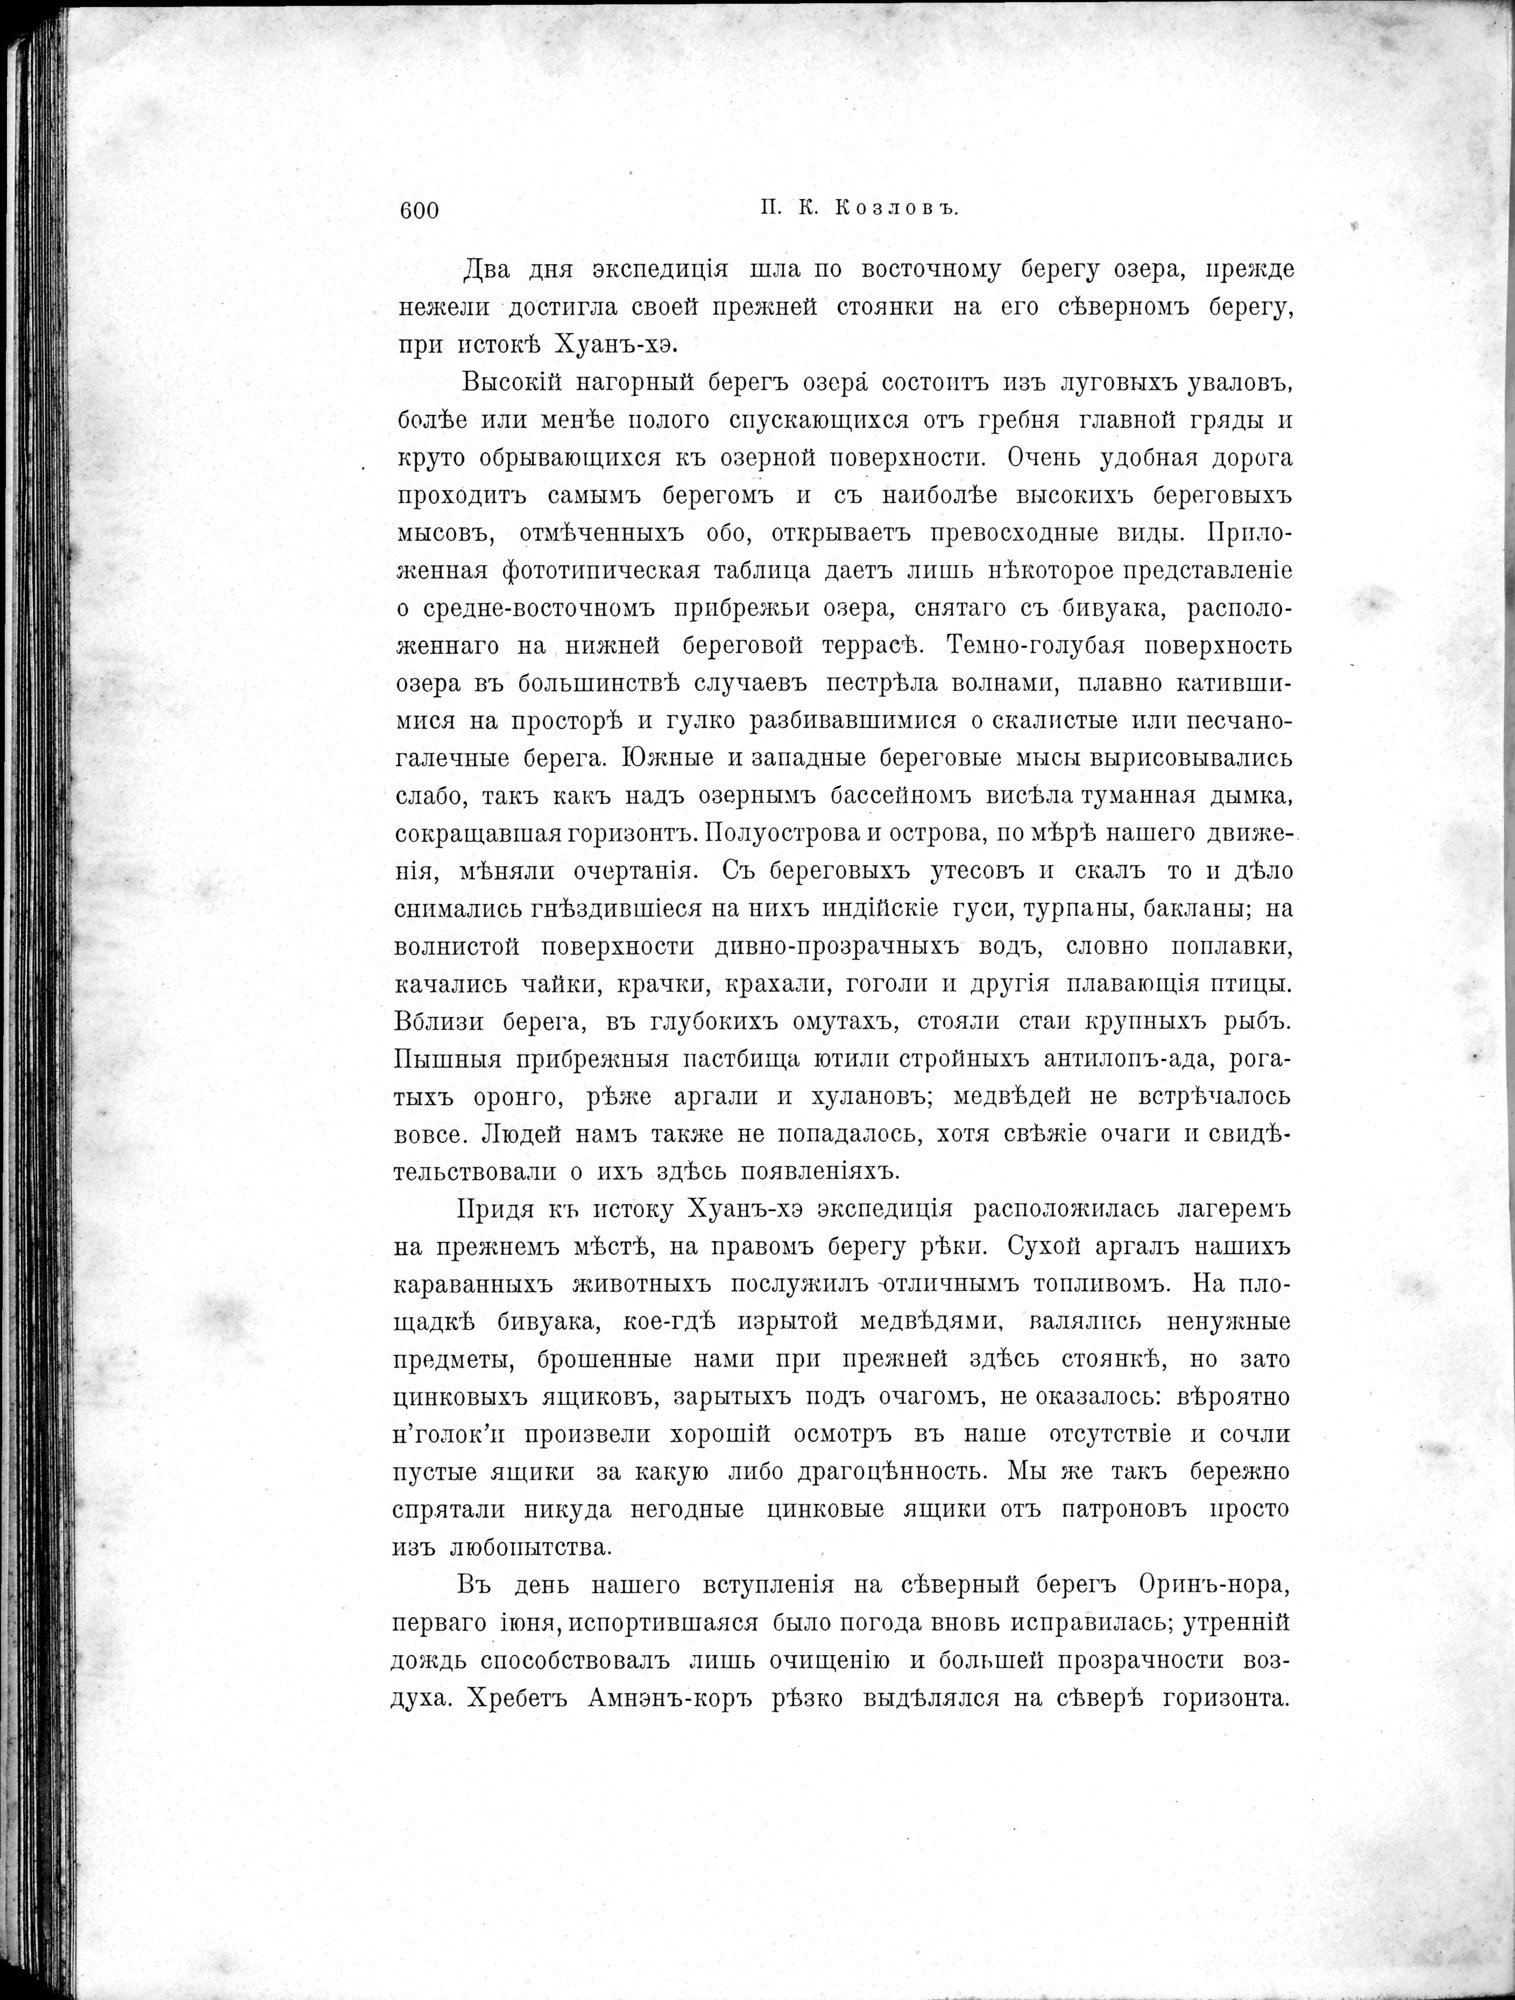 Mongoliia i Kam : vol.2 / Page 426 (Grayscale High Resolution Image)